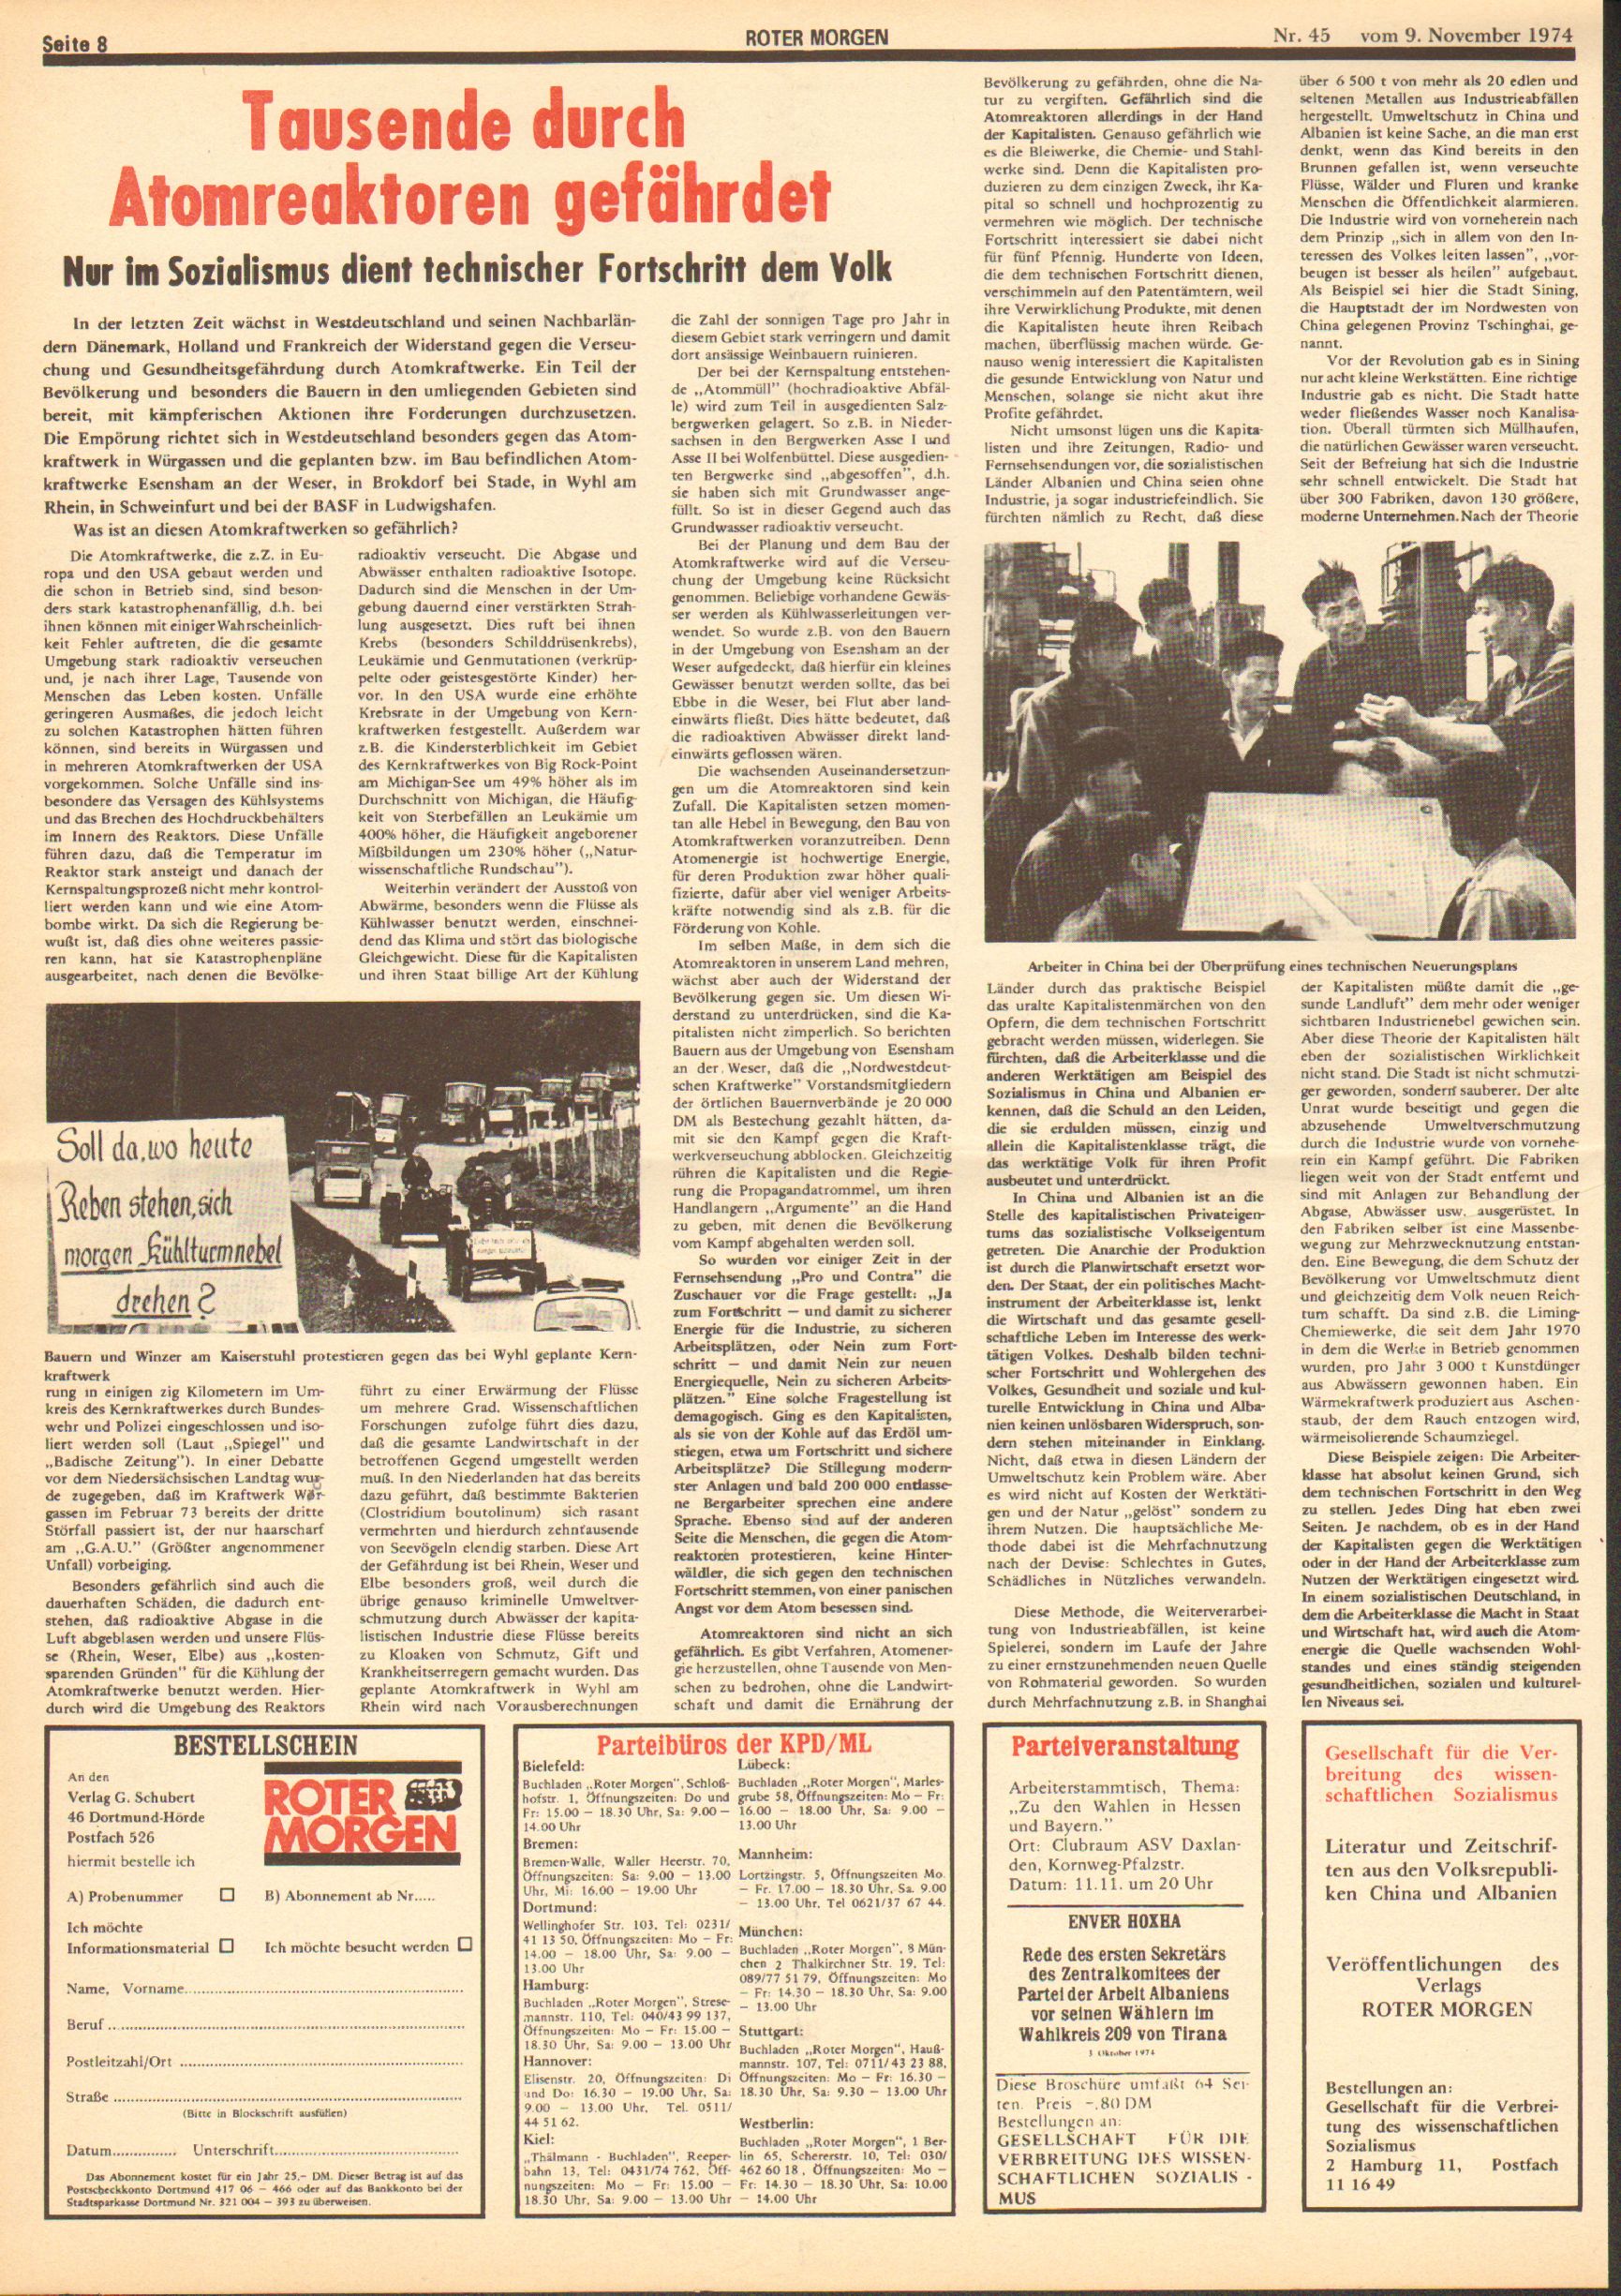 Roter Morgen, 8. Jg., 9. November 1974, Nr. 45, Seite 8